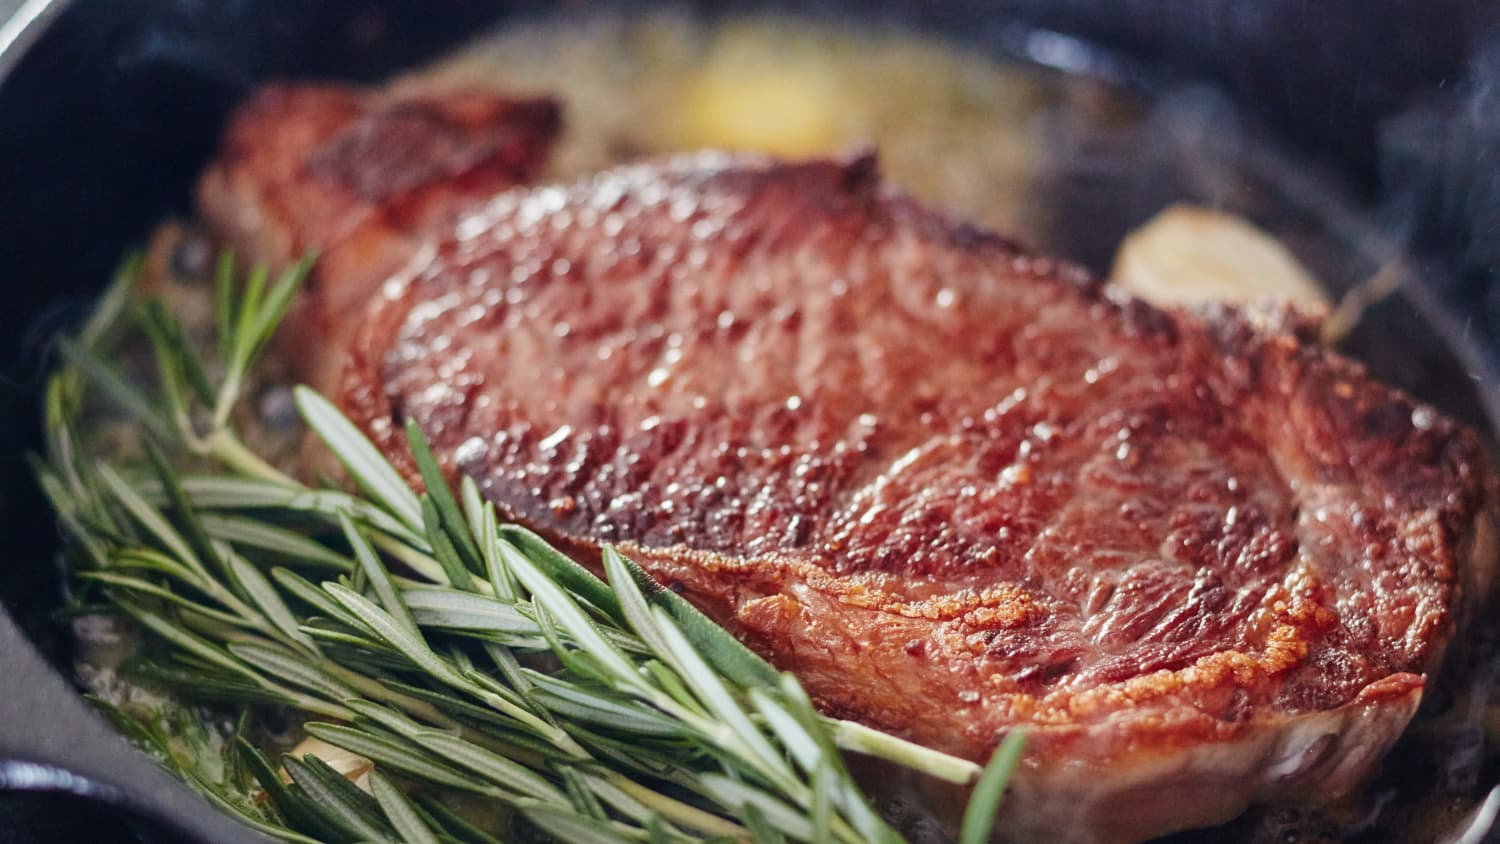 How to Make the Best Boneless Ribeye Steak Recipes
